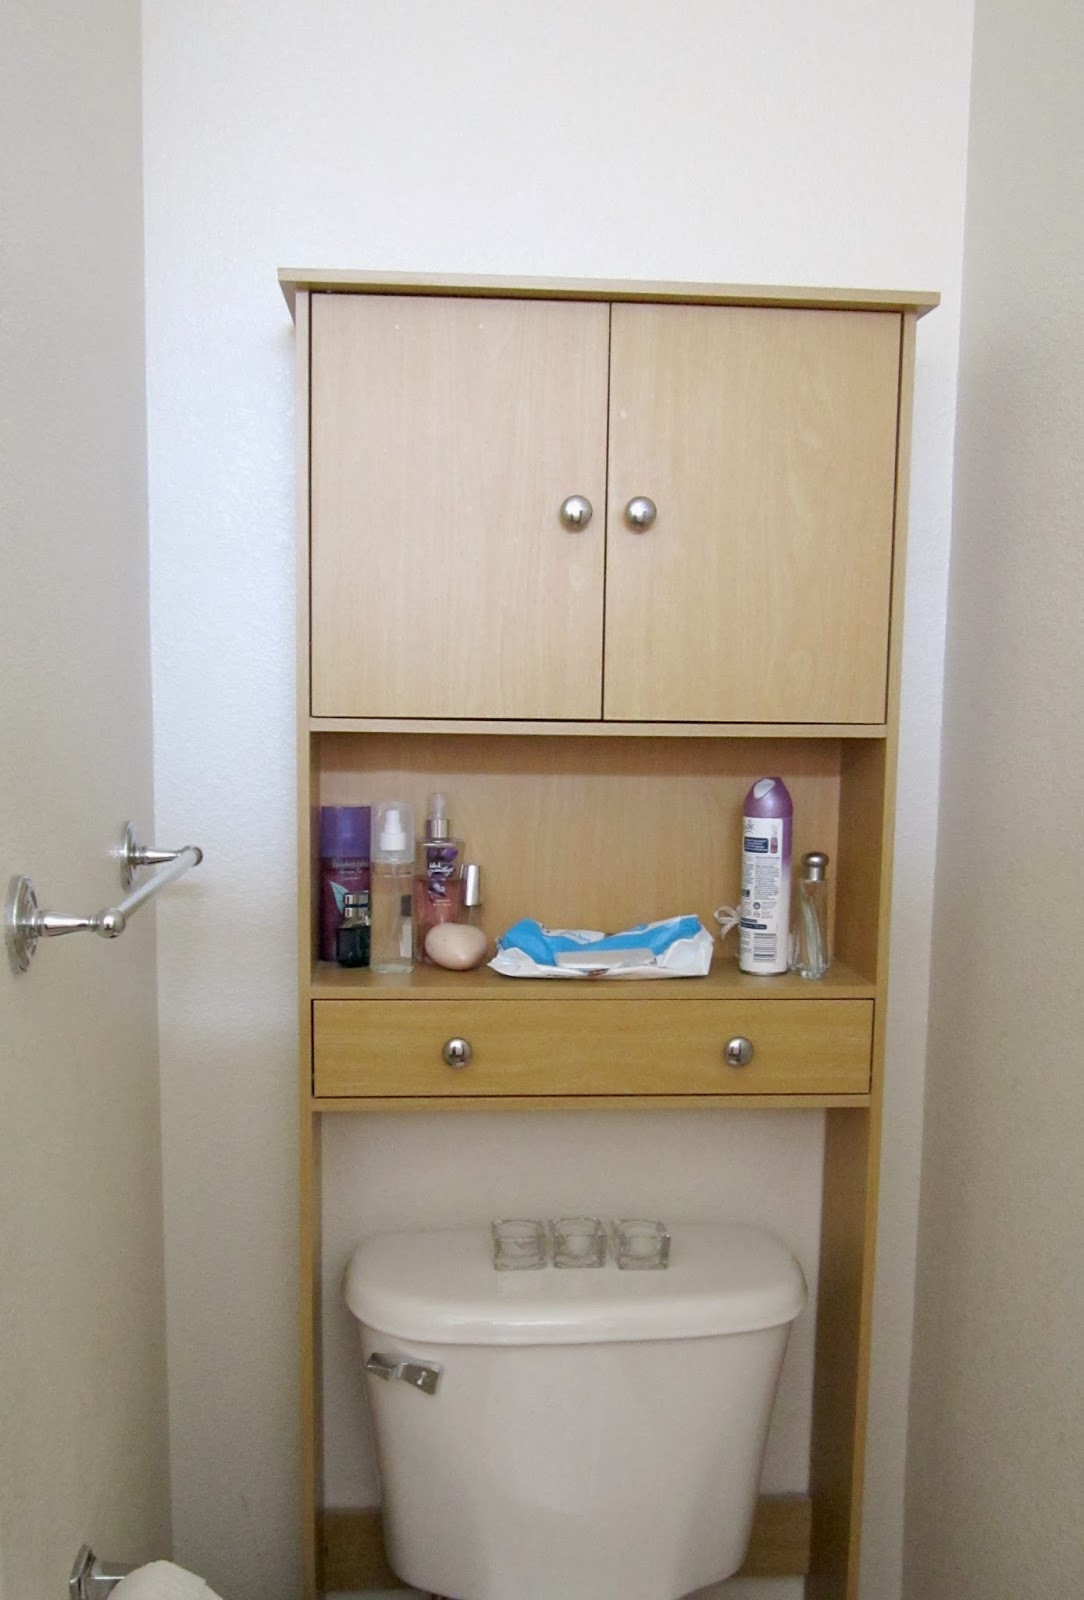 Best ideas about DIY Bathroom Shelves Over Toilet
. Save or Pin Restoration Beauty DIY Toilet Shelves Now.